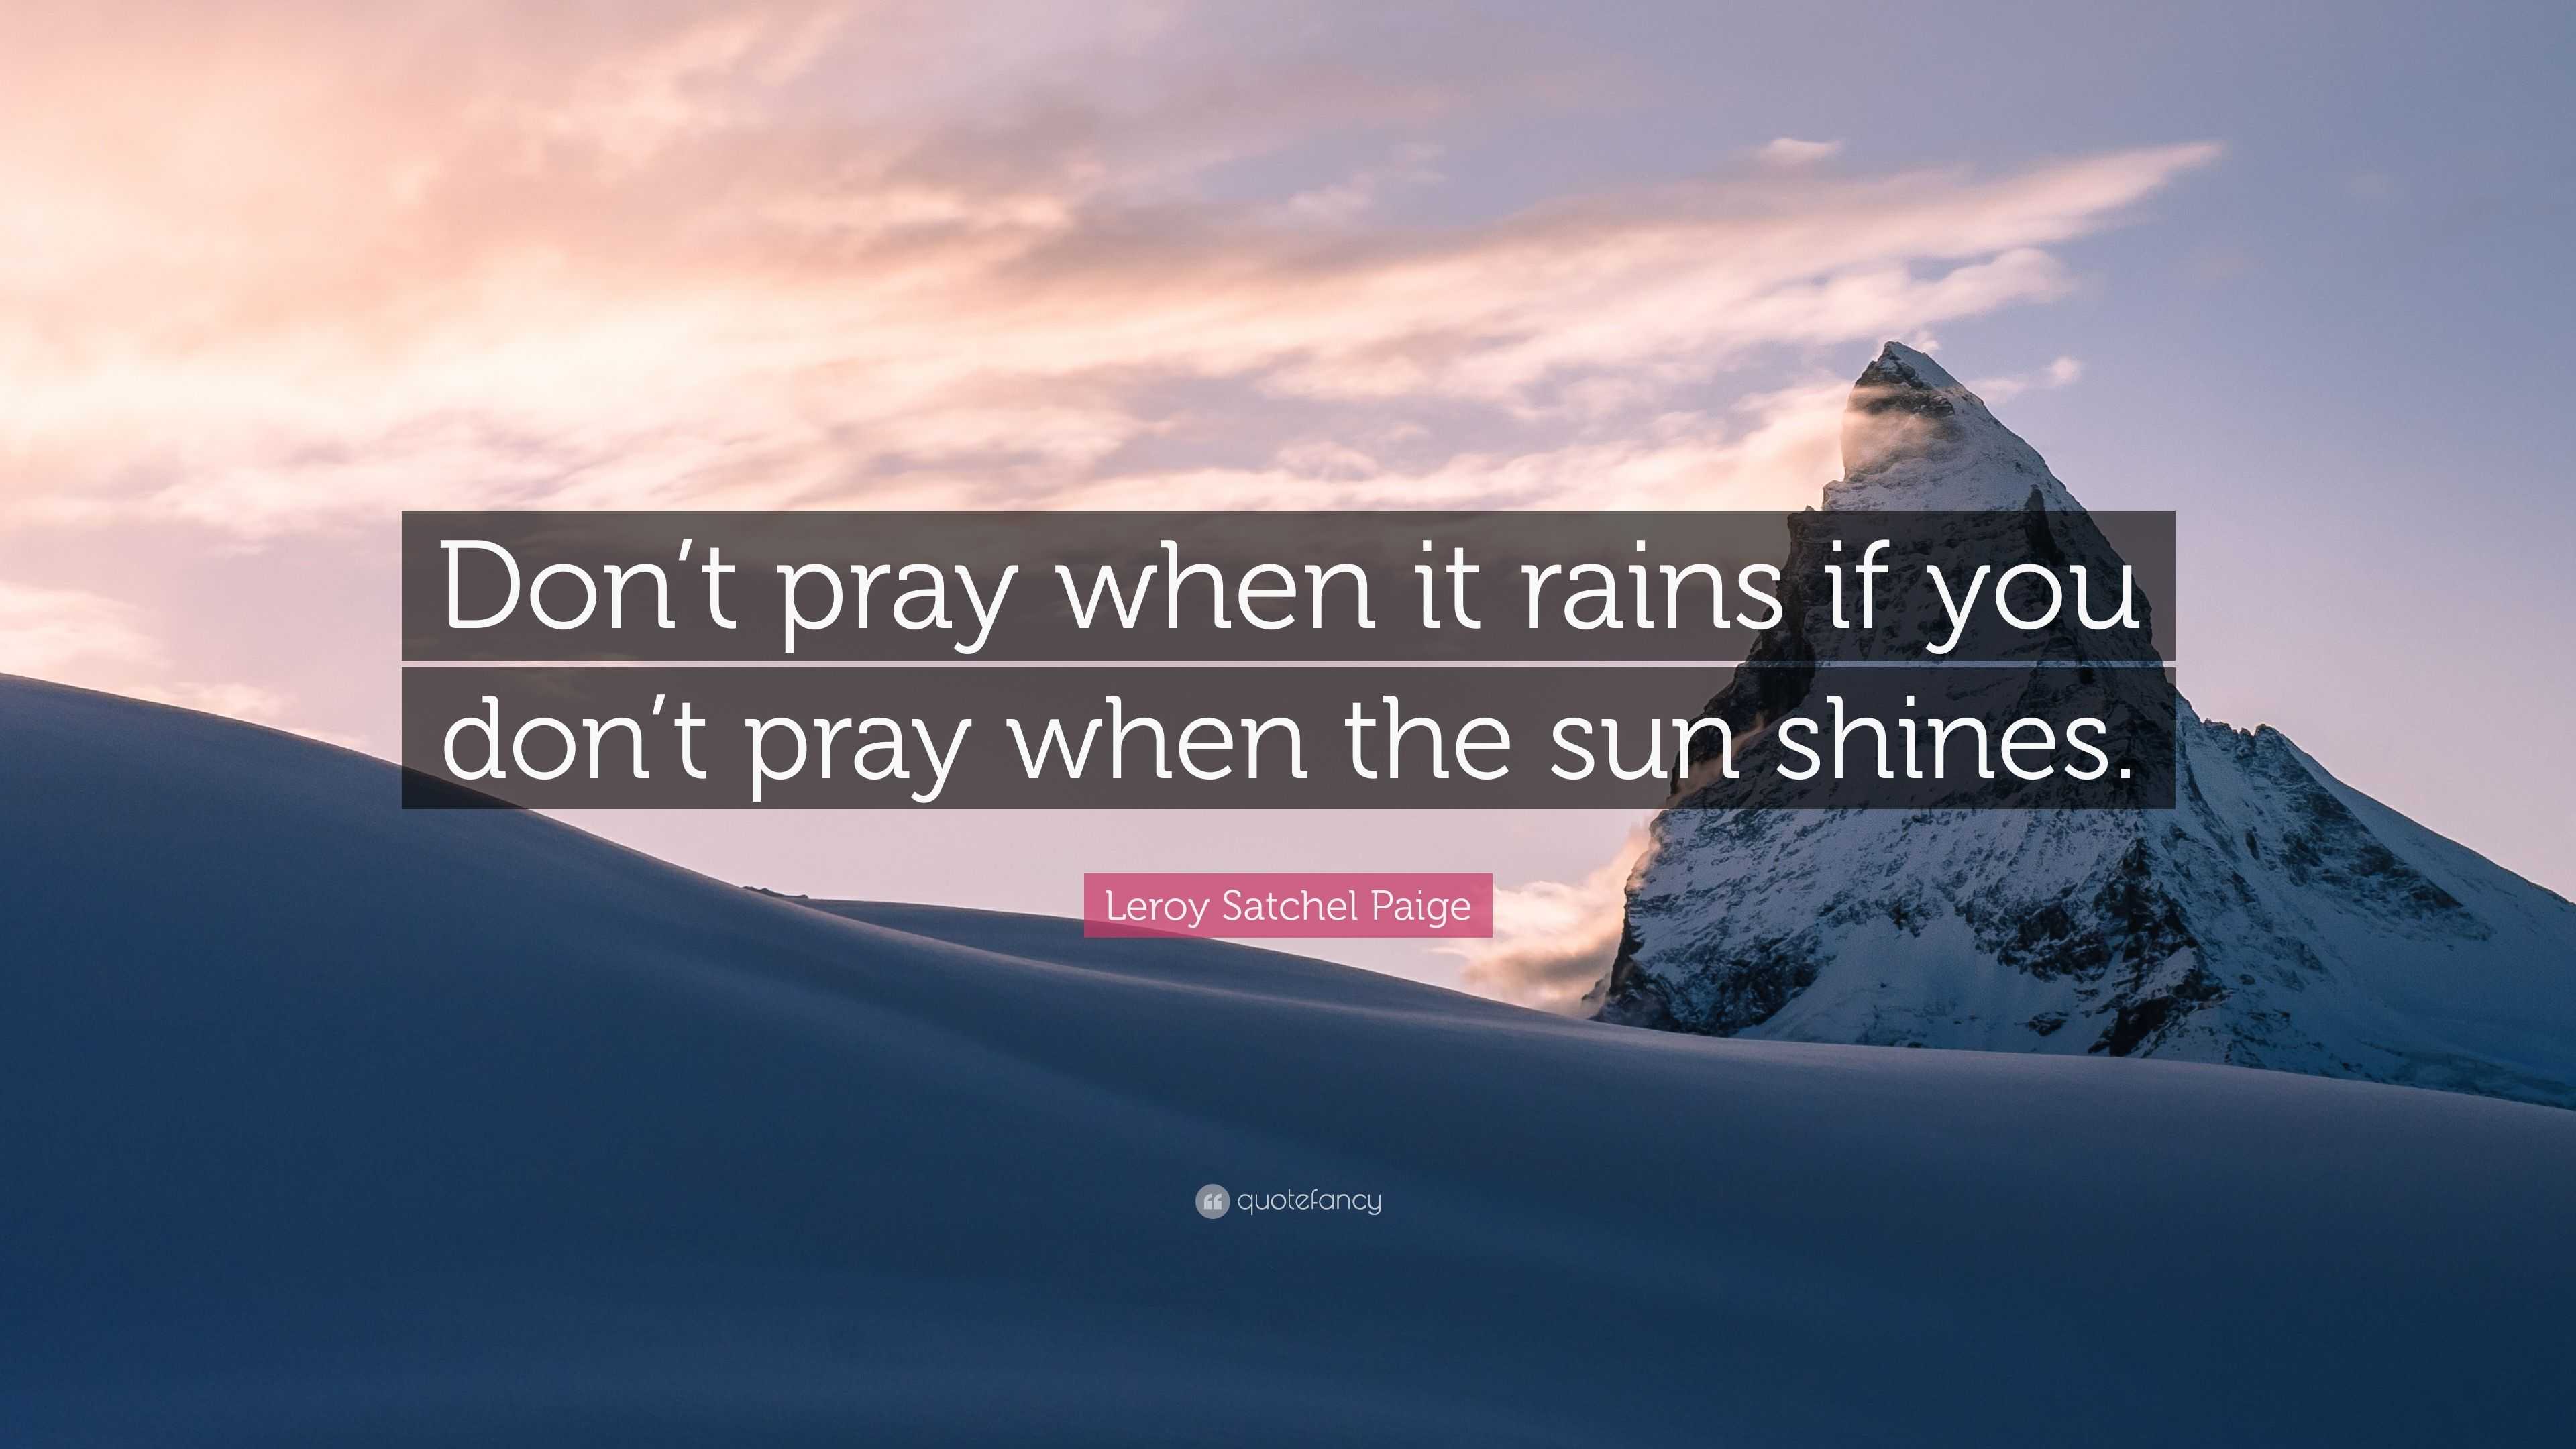 Don't pray when it rains if you don't pray when the sun